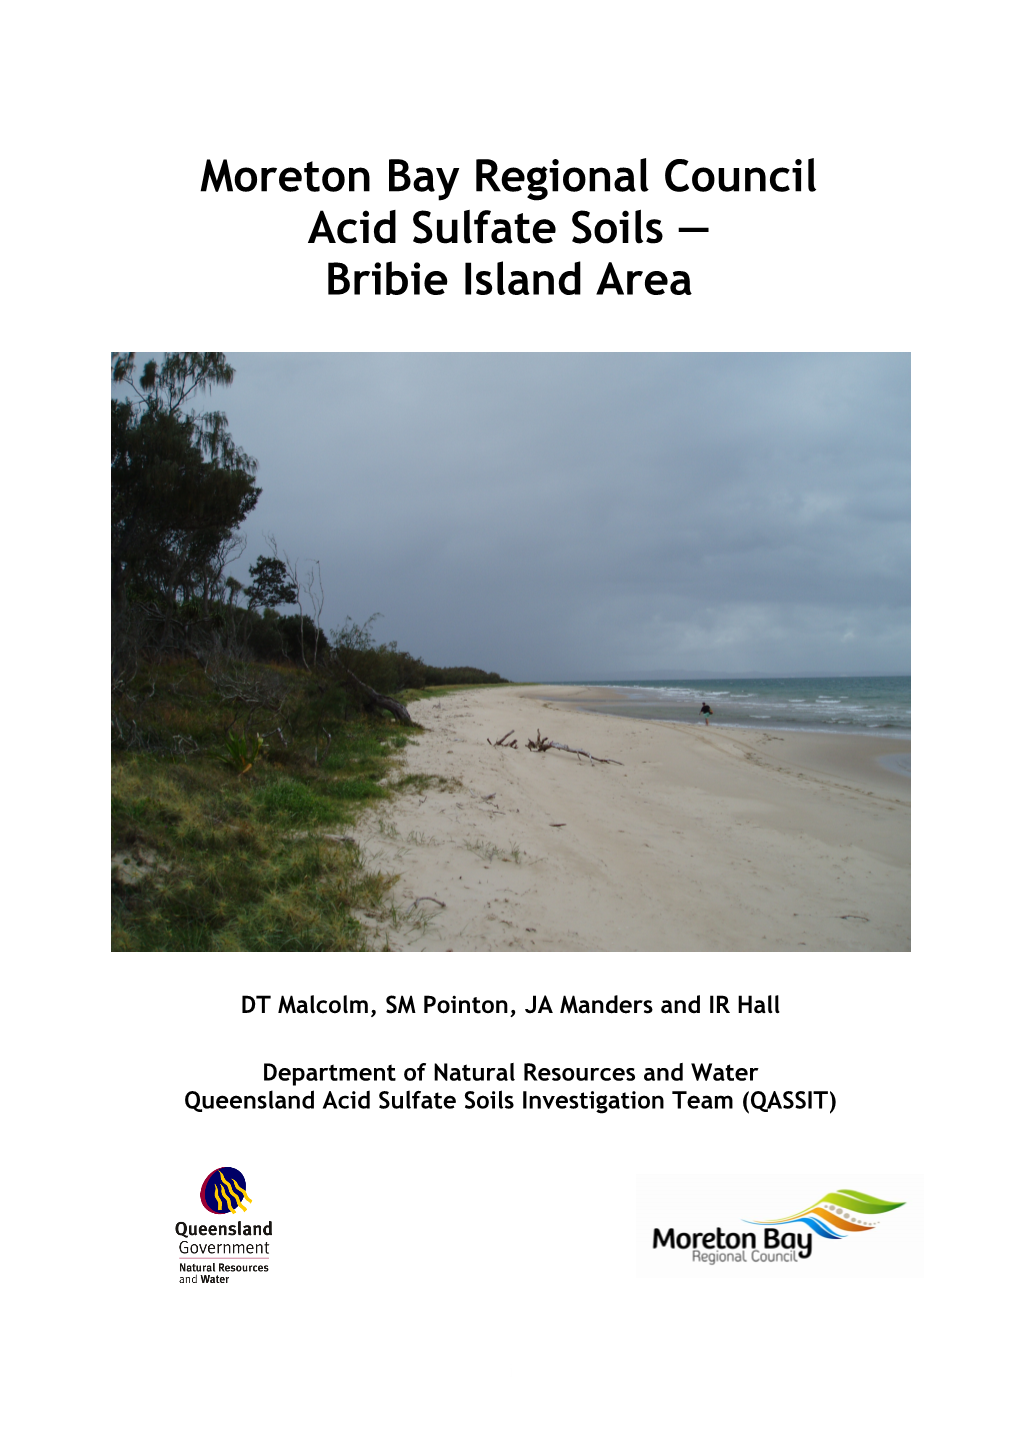 Moreton Bay Regional Council Acid Sulfate Soils — Bribie Island Area